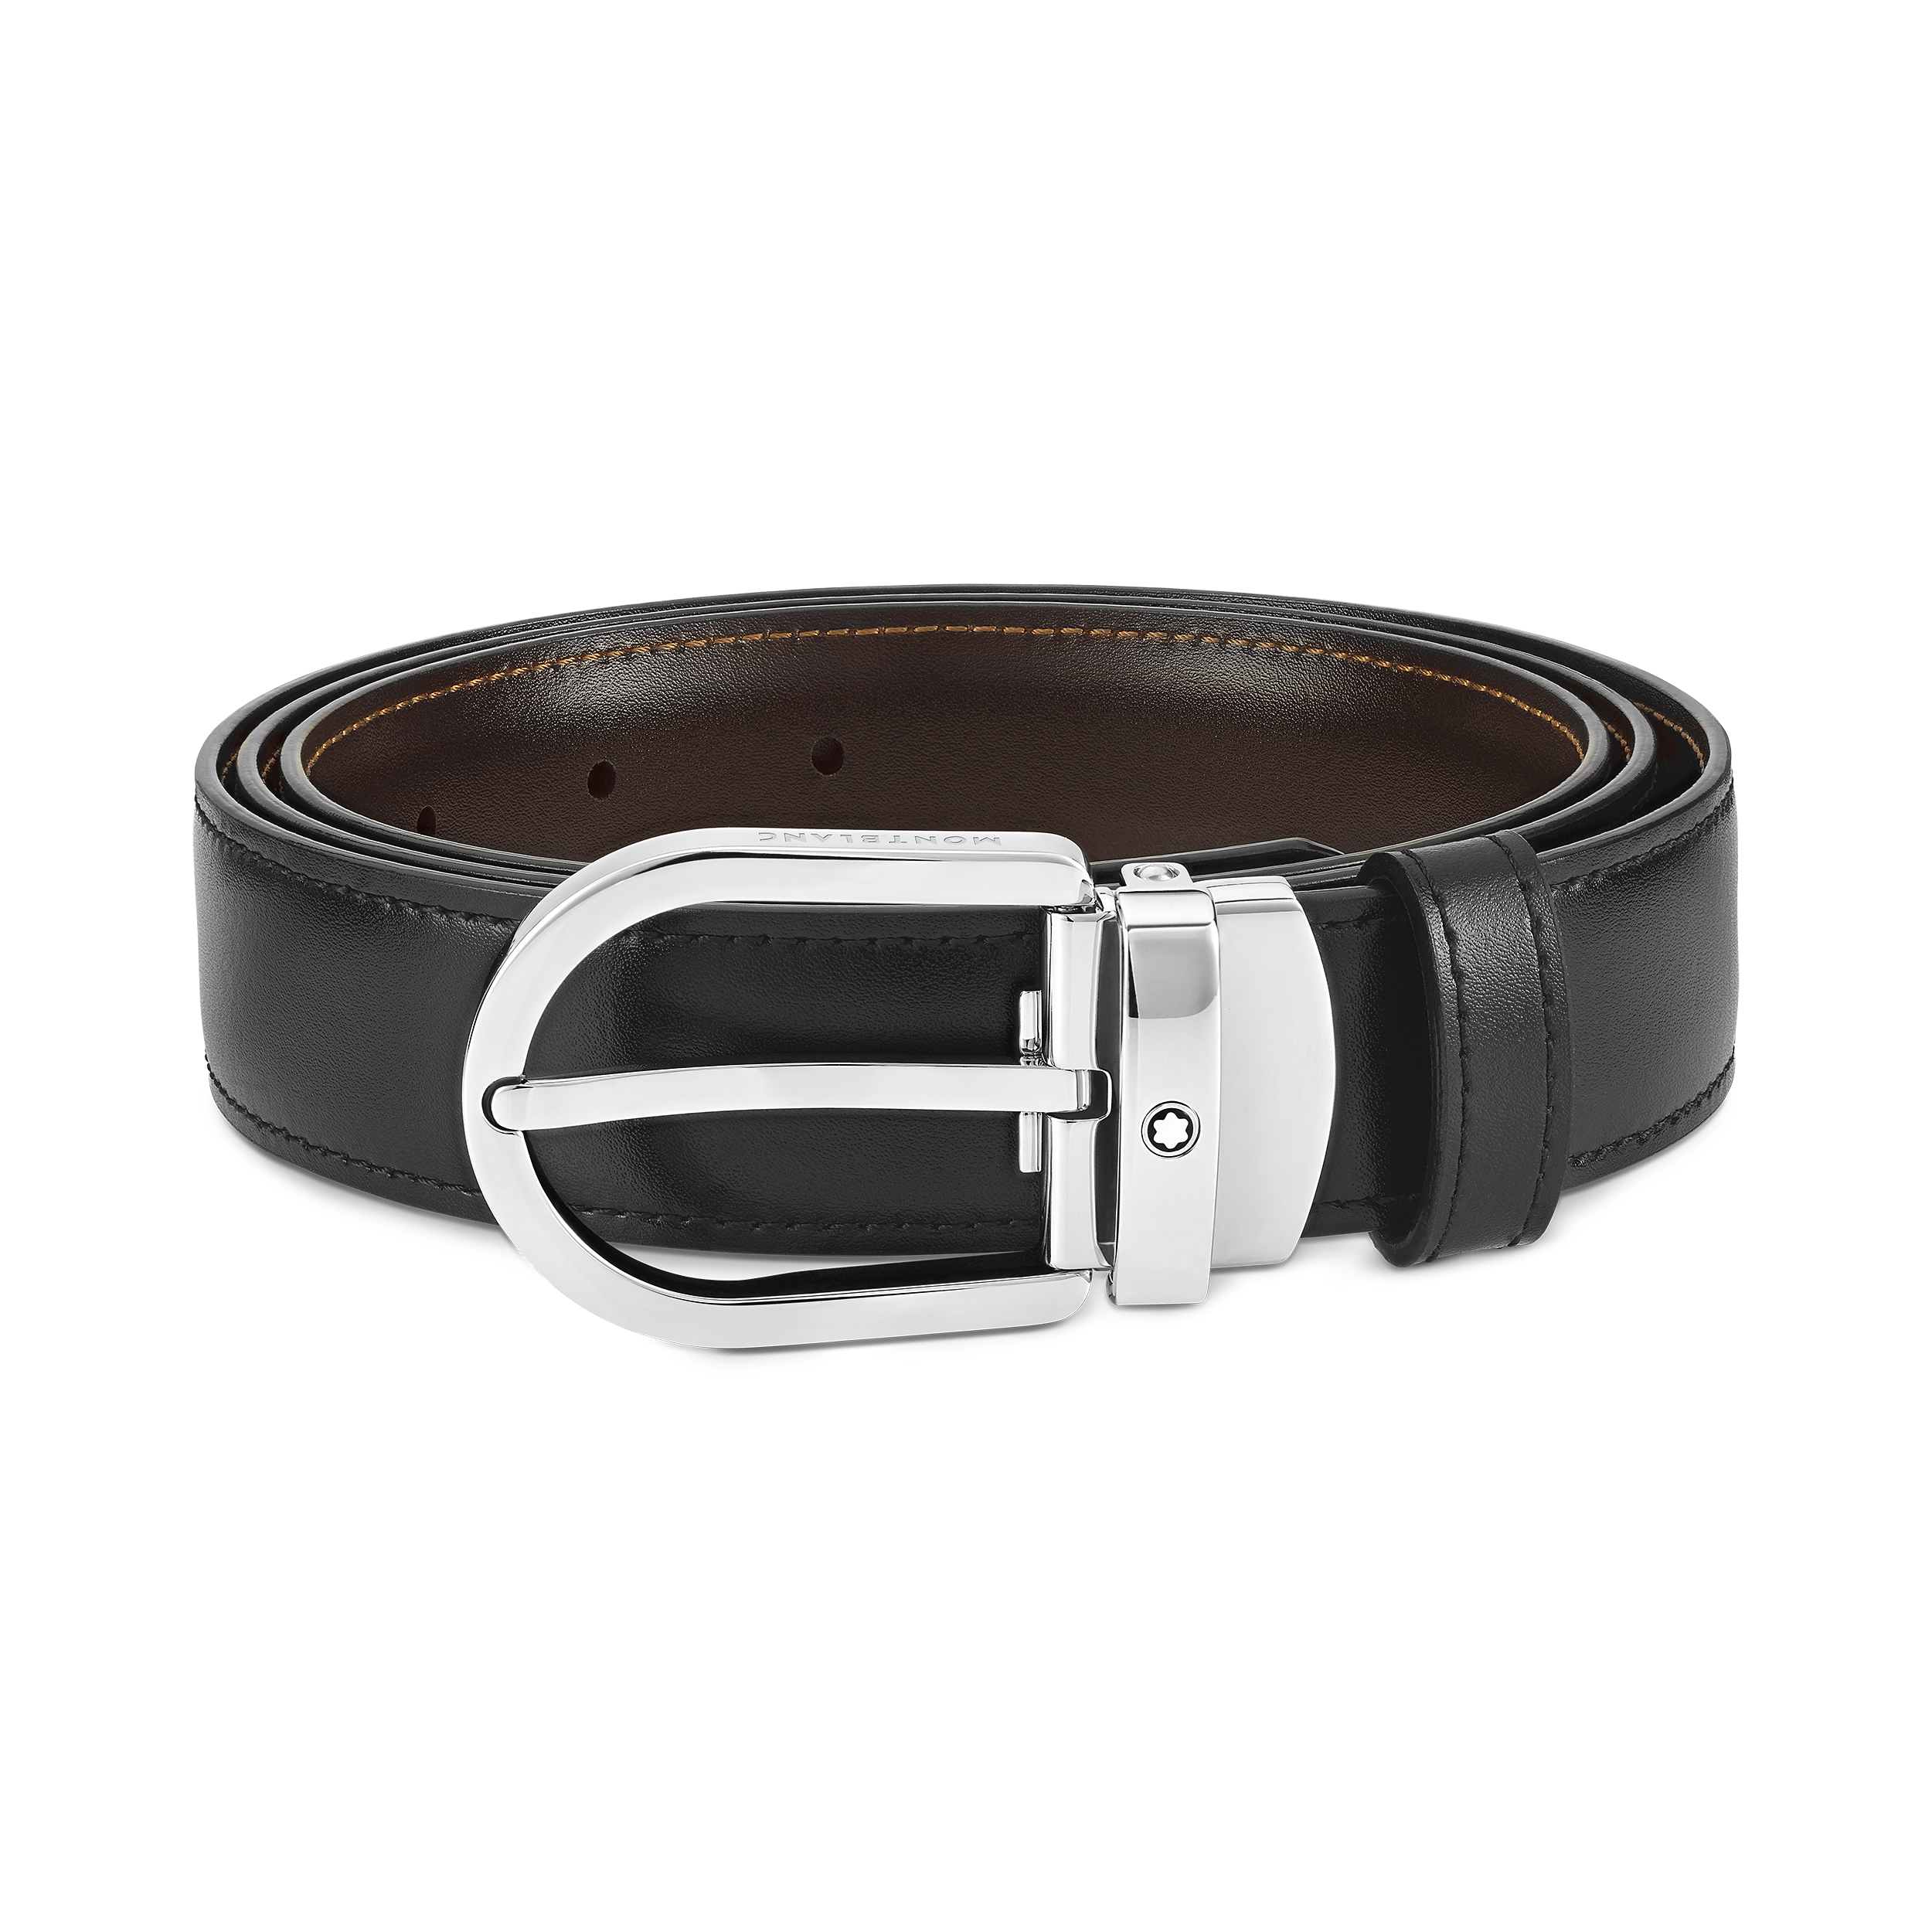 Horseshoe buckle black/brown 30 mm reversible leather belt, image 1